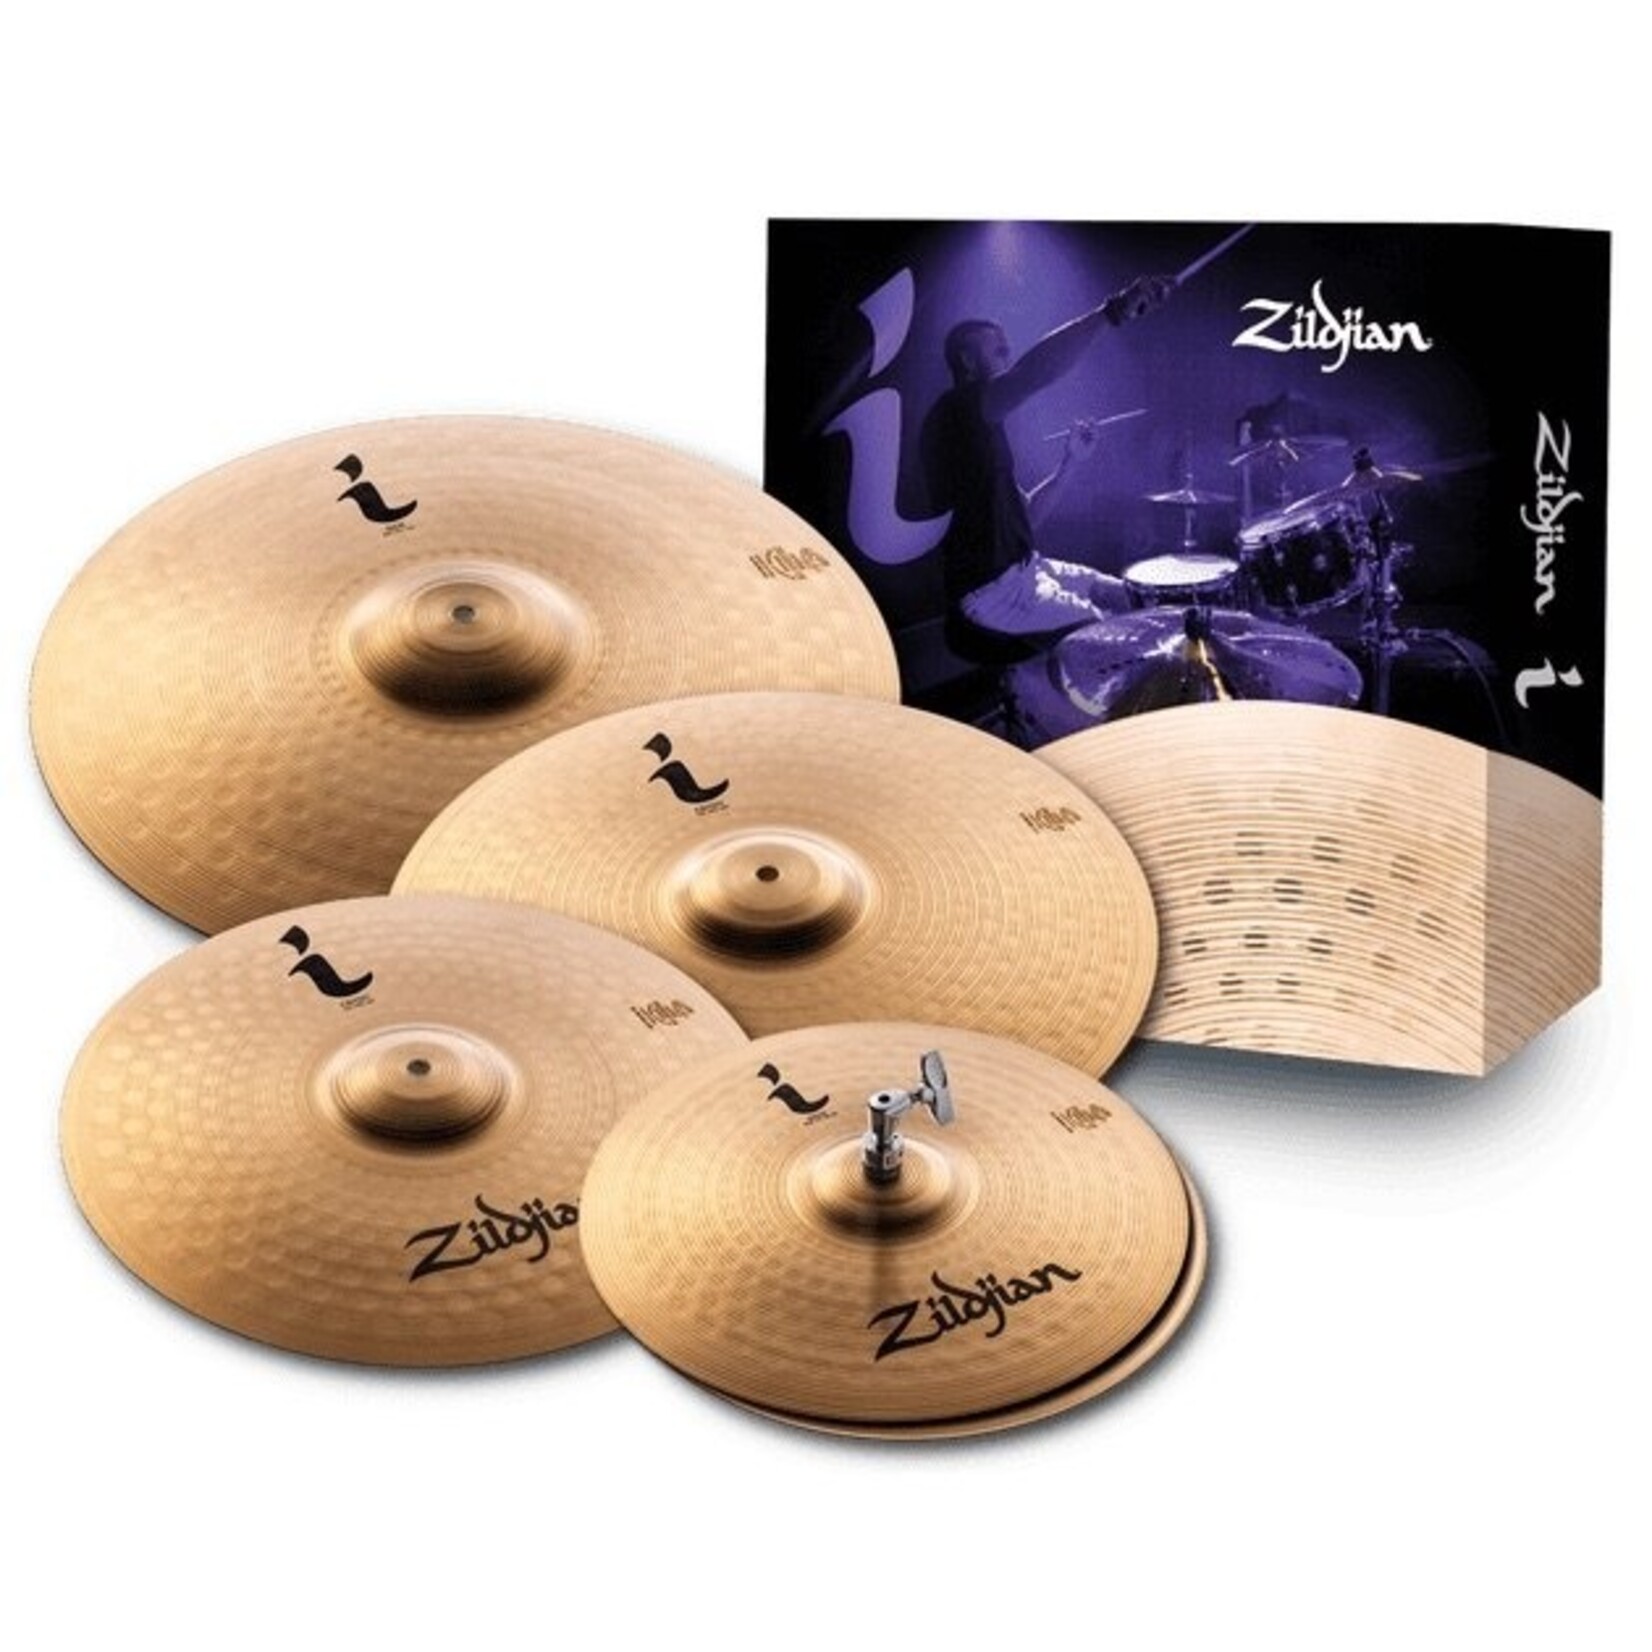 Zildjian I Pro Gig Cymbal Pack (14/16/18/20)